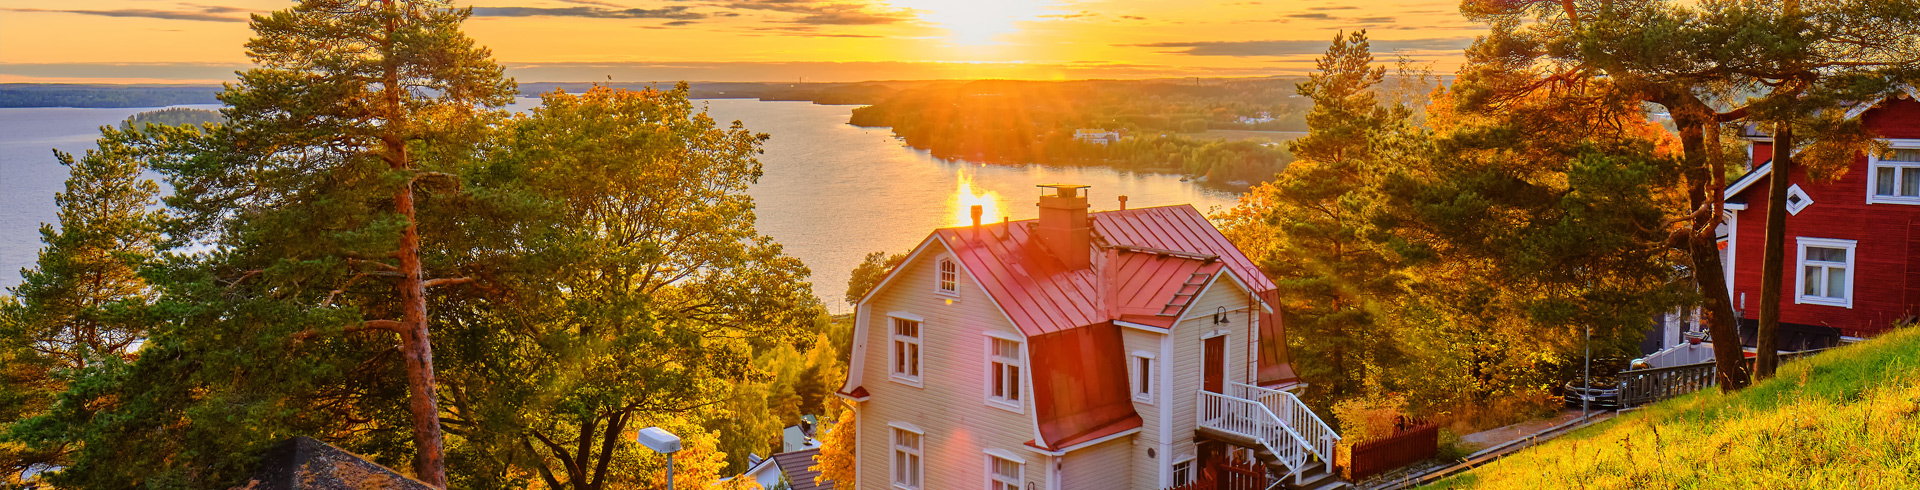 Coucher de soleil - Tampere